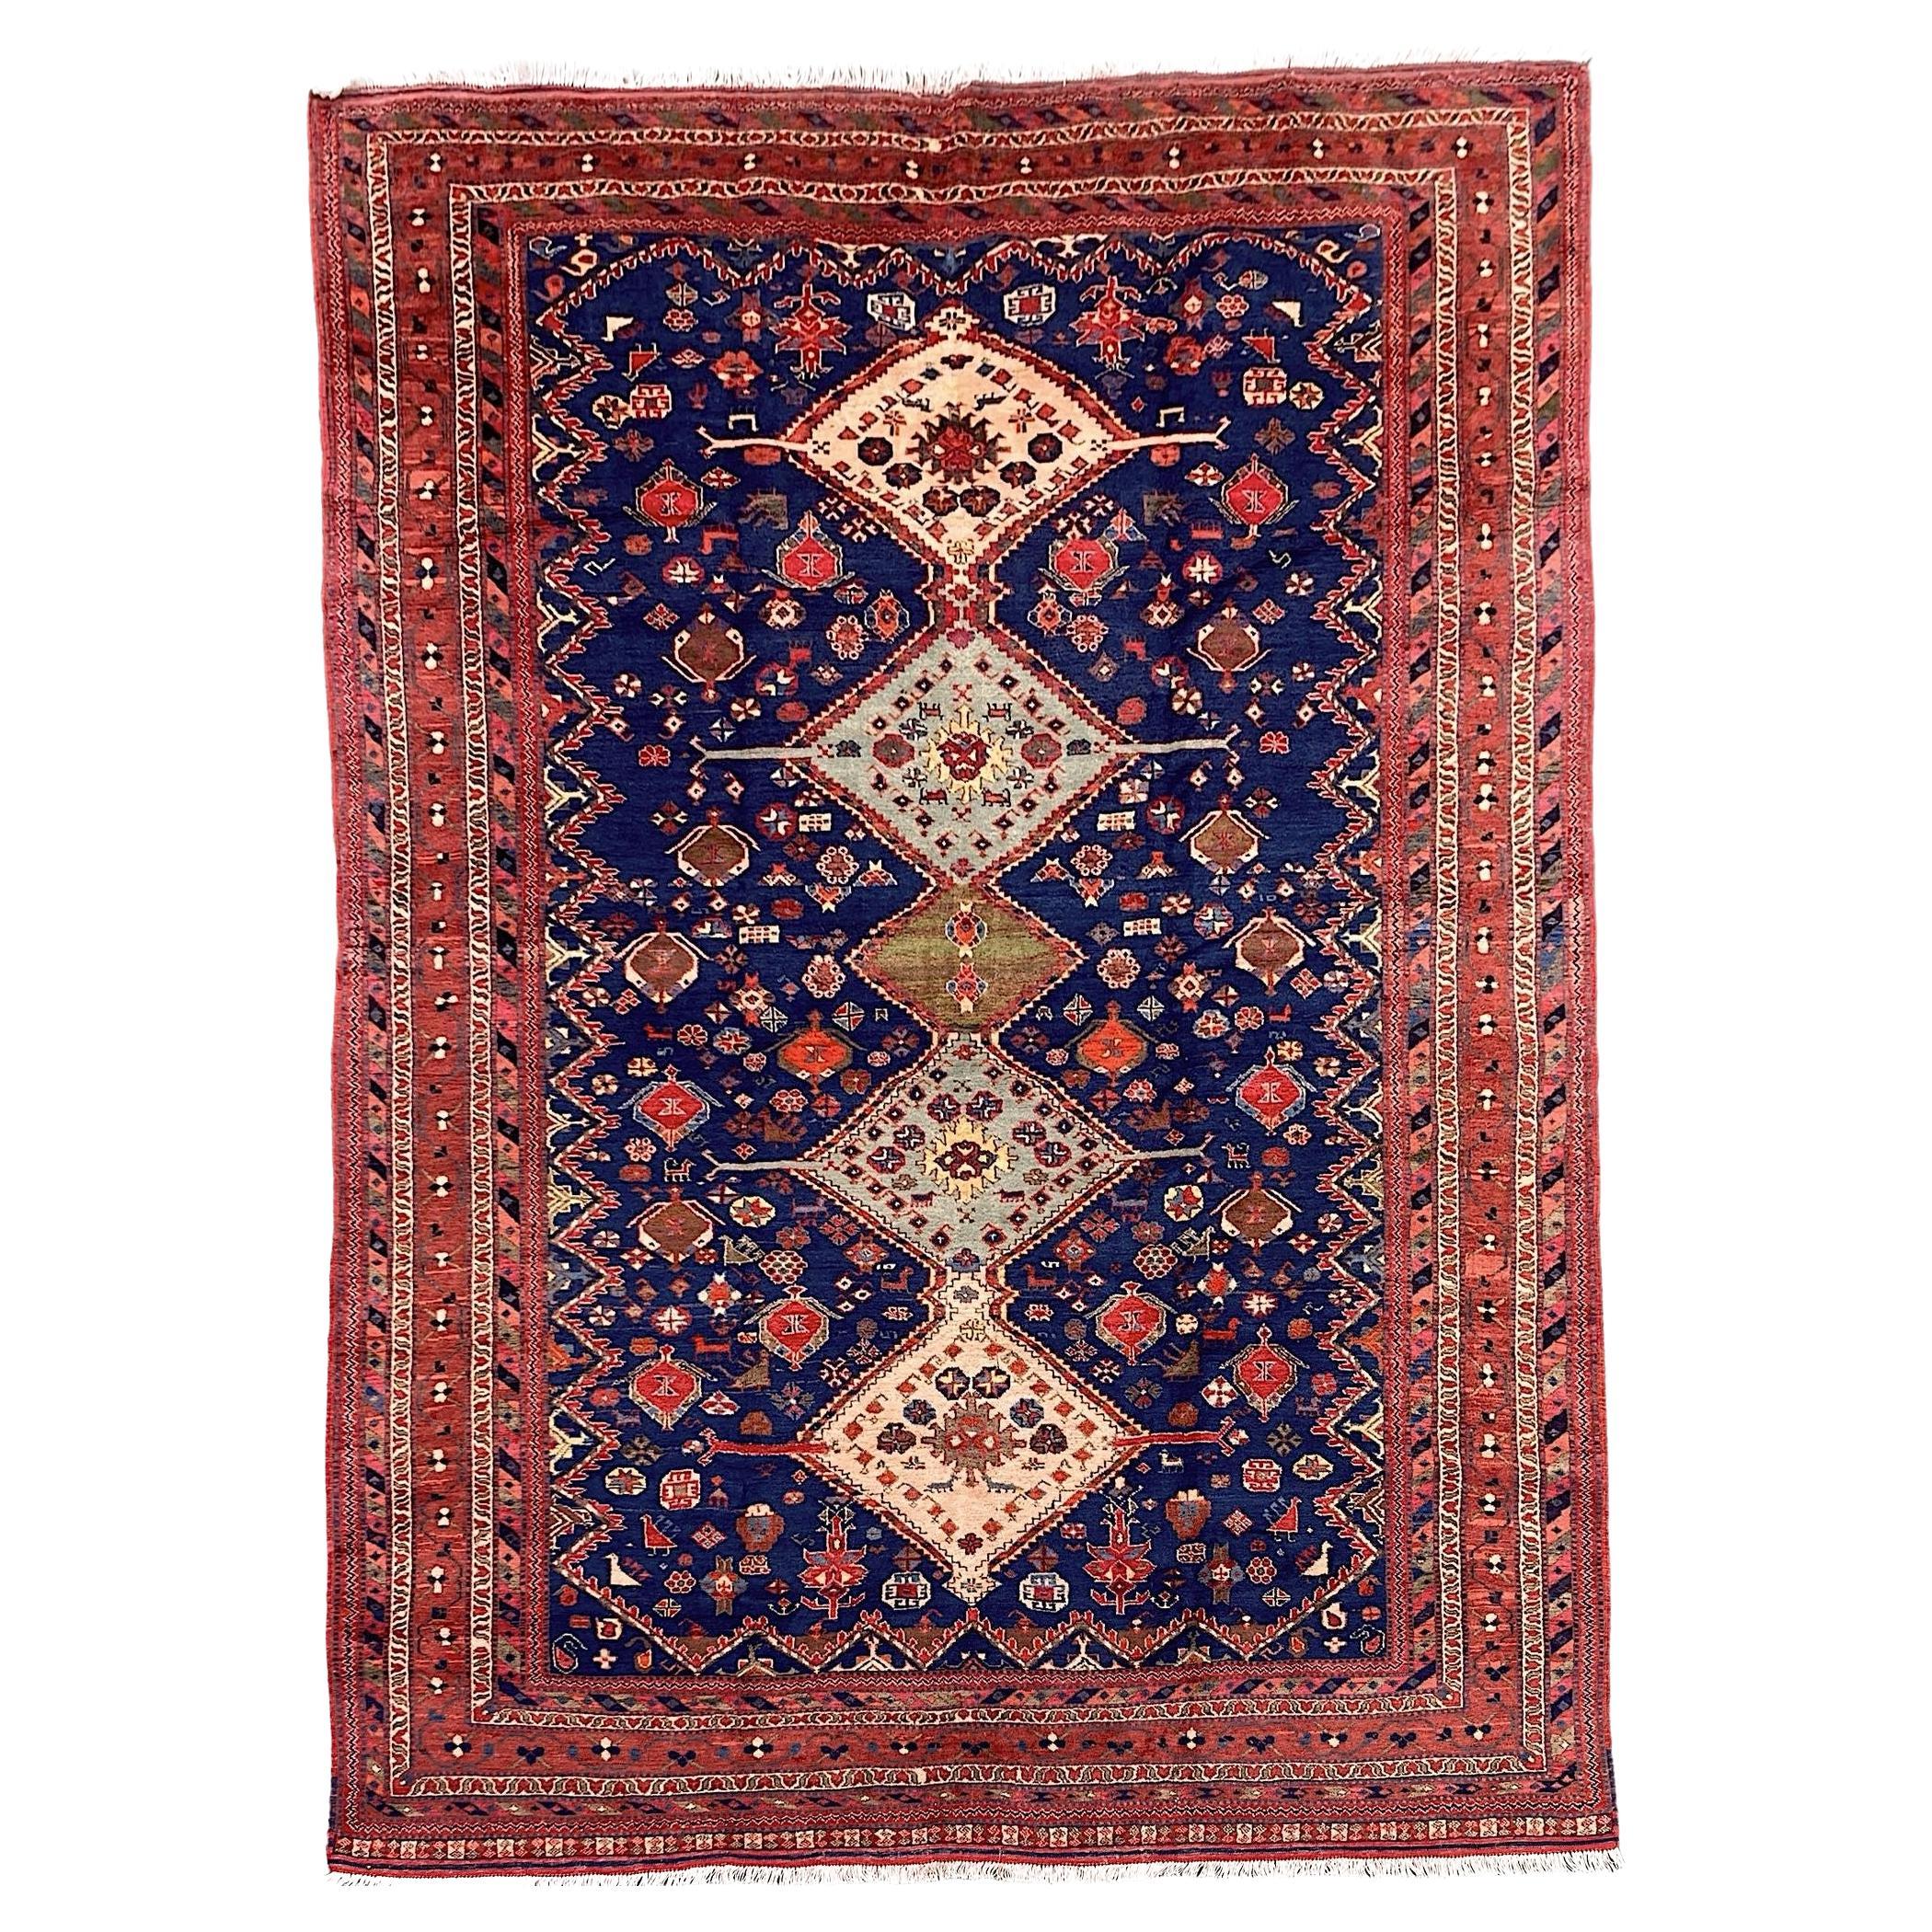 Vintage Afshar Carpet 2.92m x 2.03m